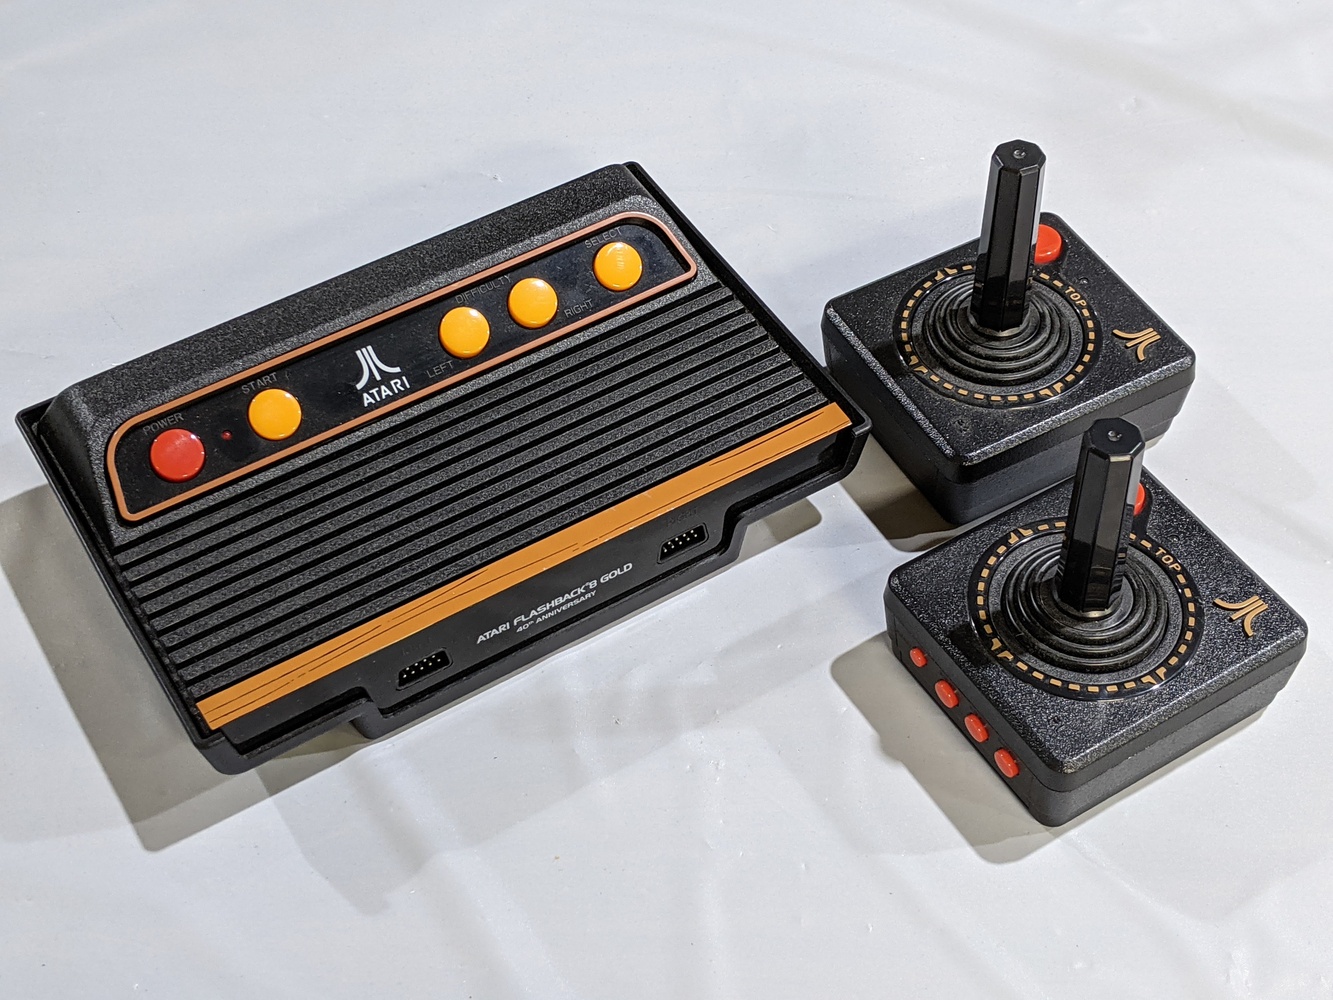 Atari 2600 (ar3620) Flashback 8 Gold - 2 Controllers HDMI 120 Games! |  Avenue Shop Swap & Sell